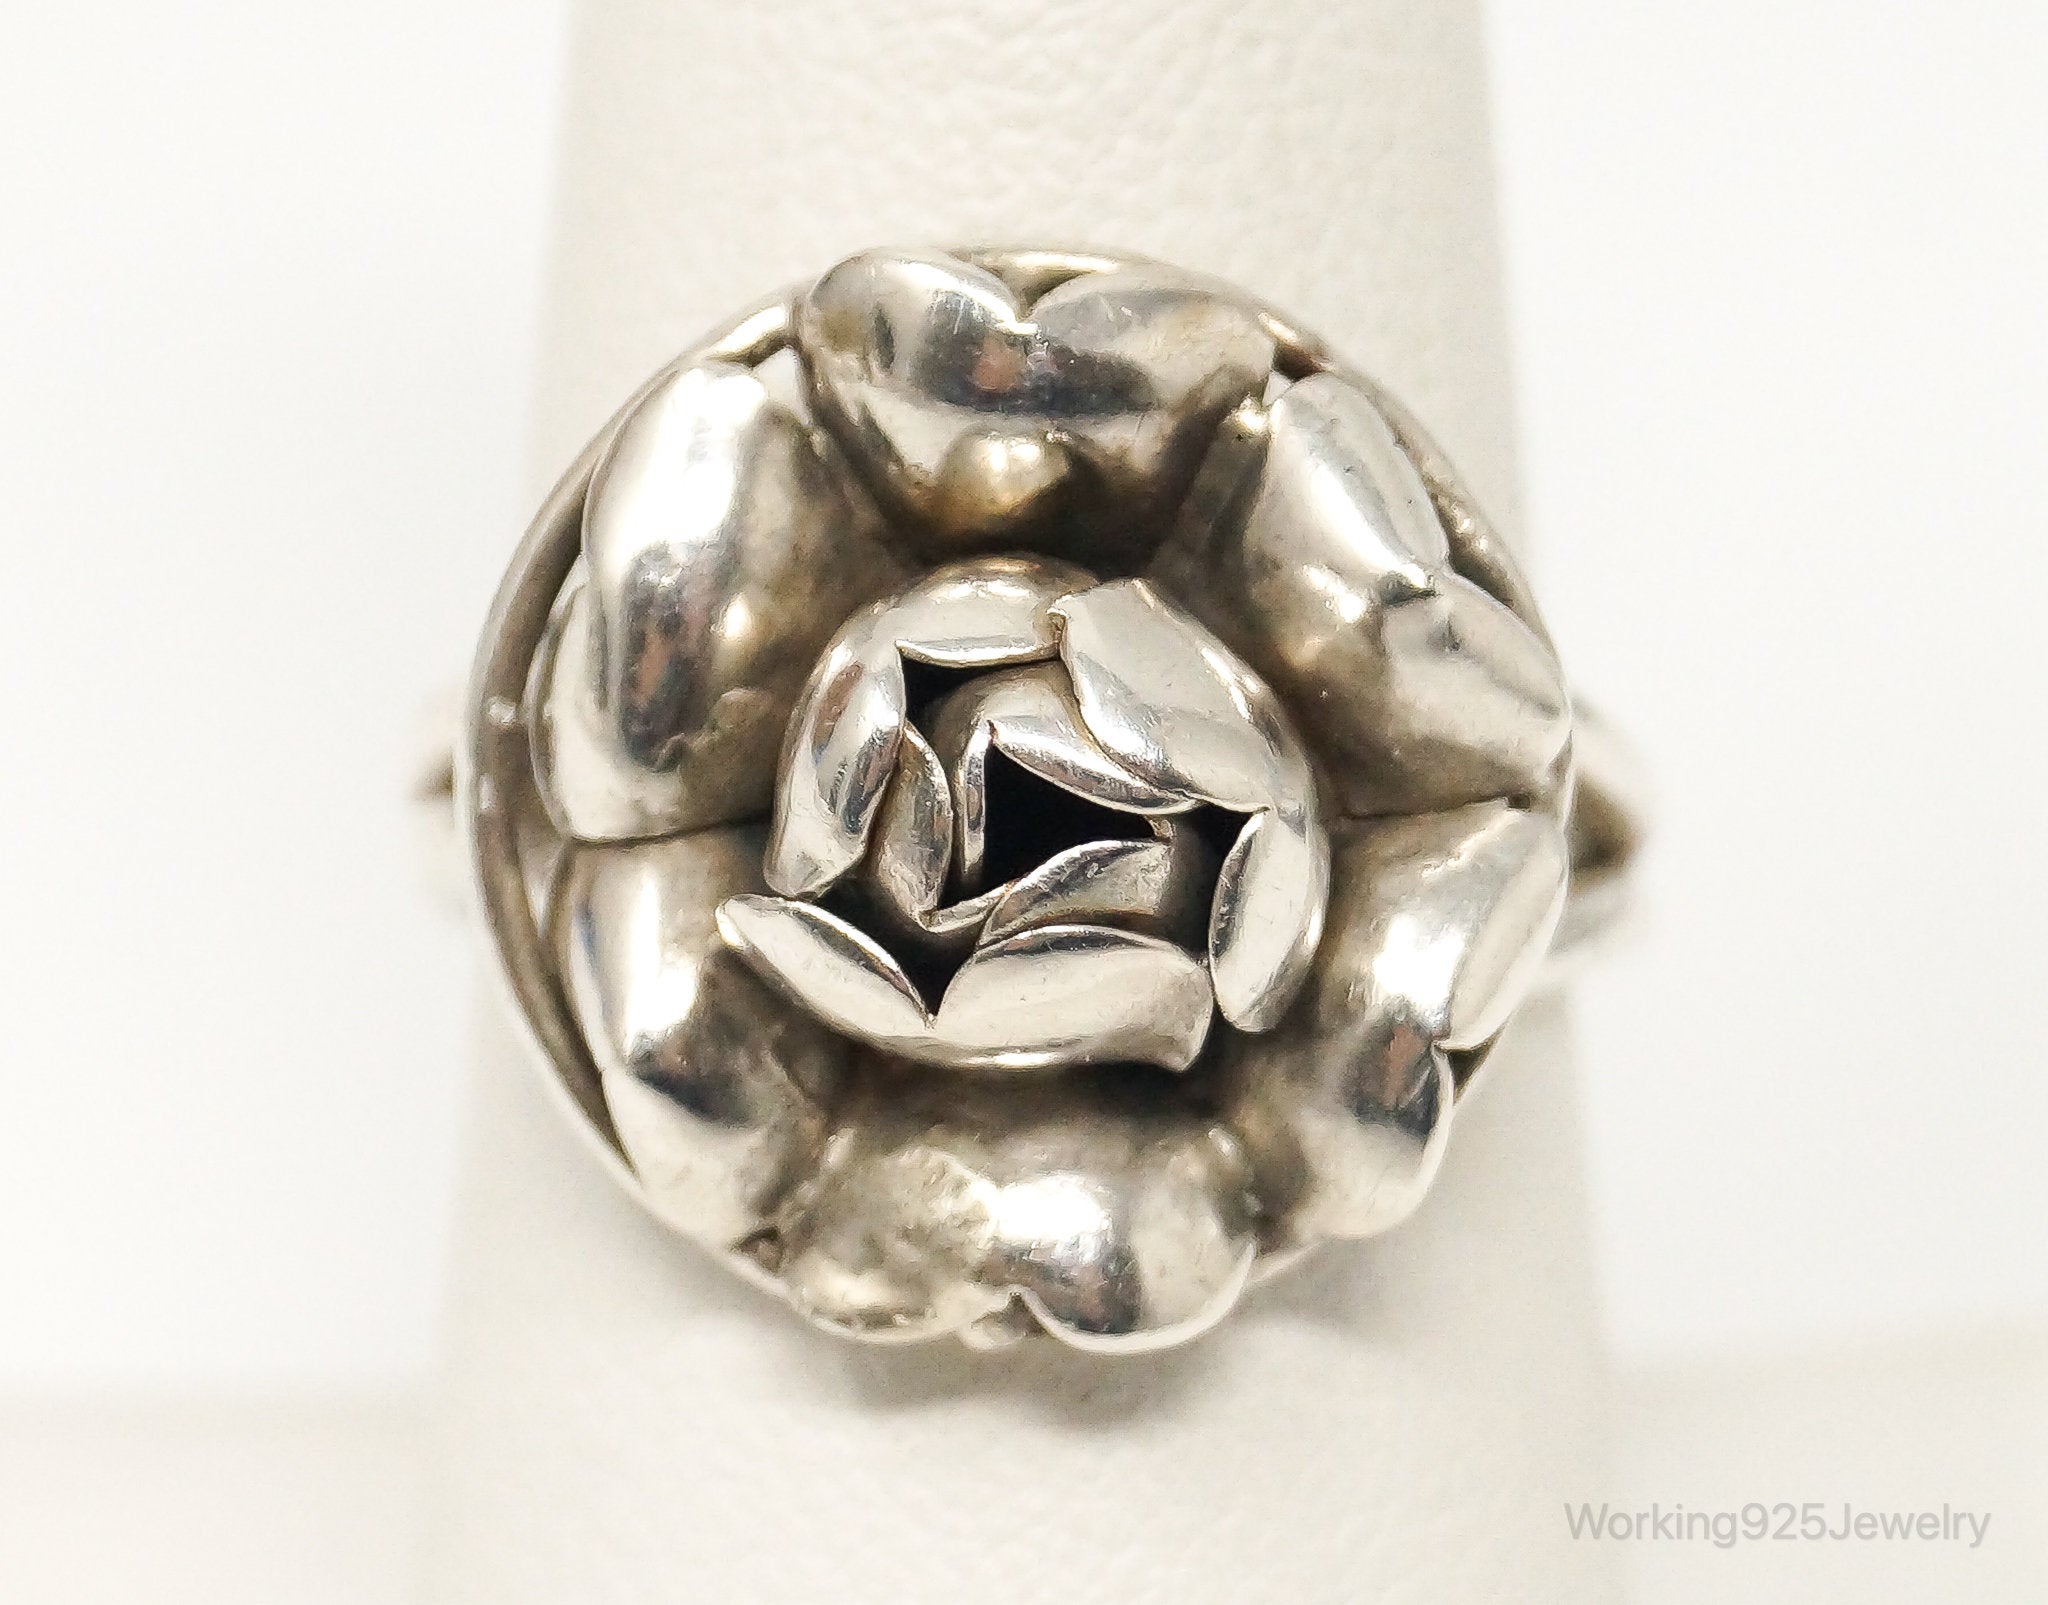 Vintage Handmade 3D Flower Sterling Silver Ring - Size 7.75